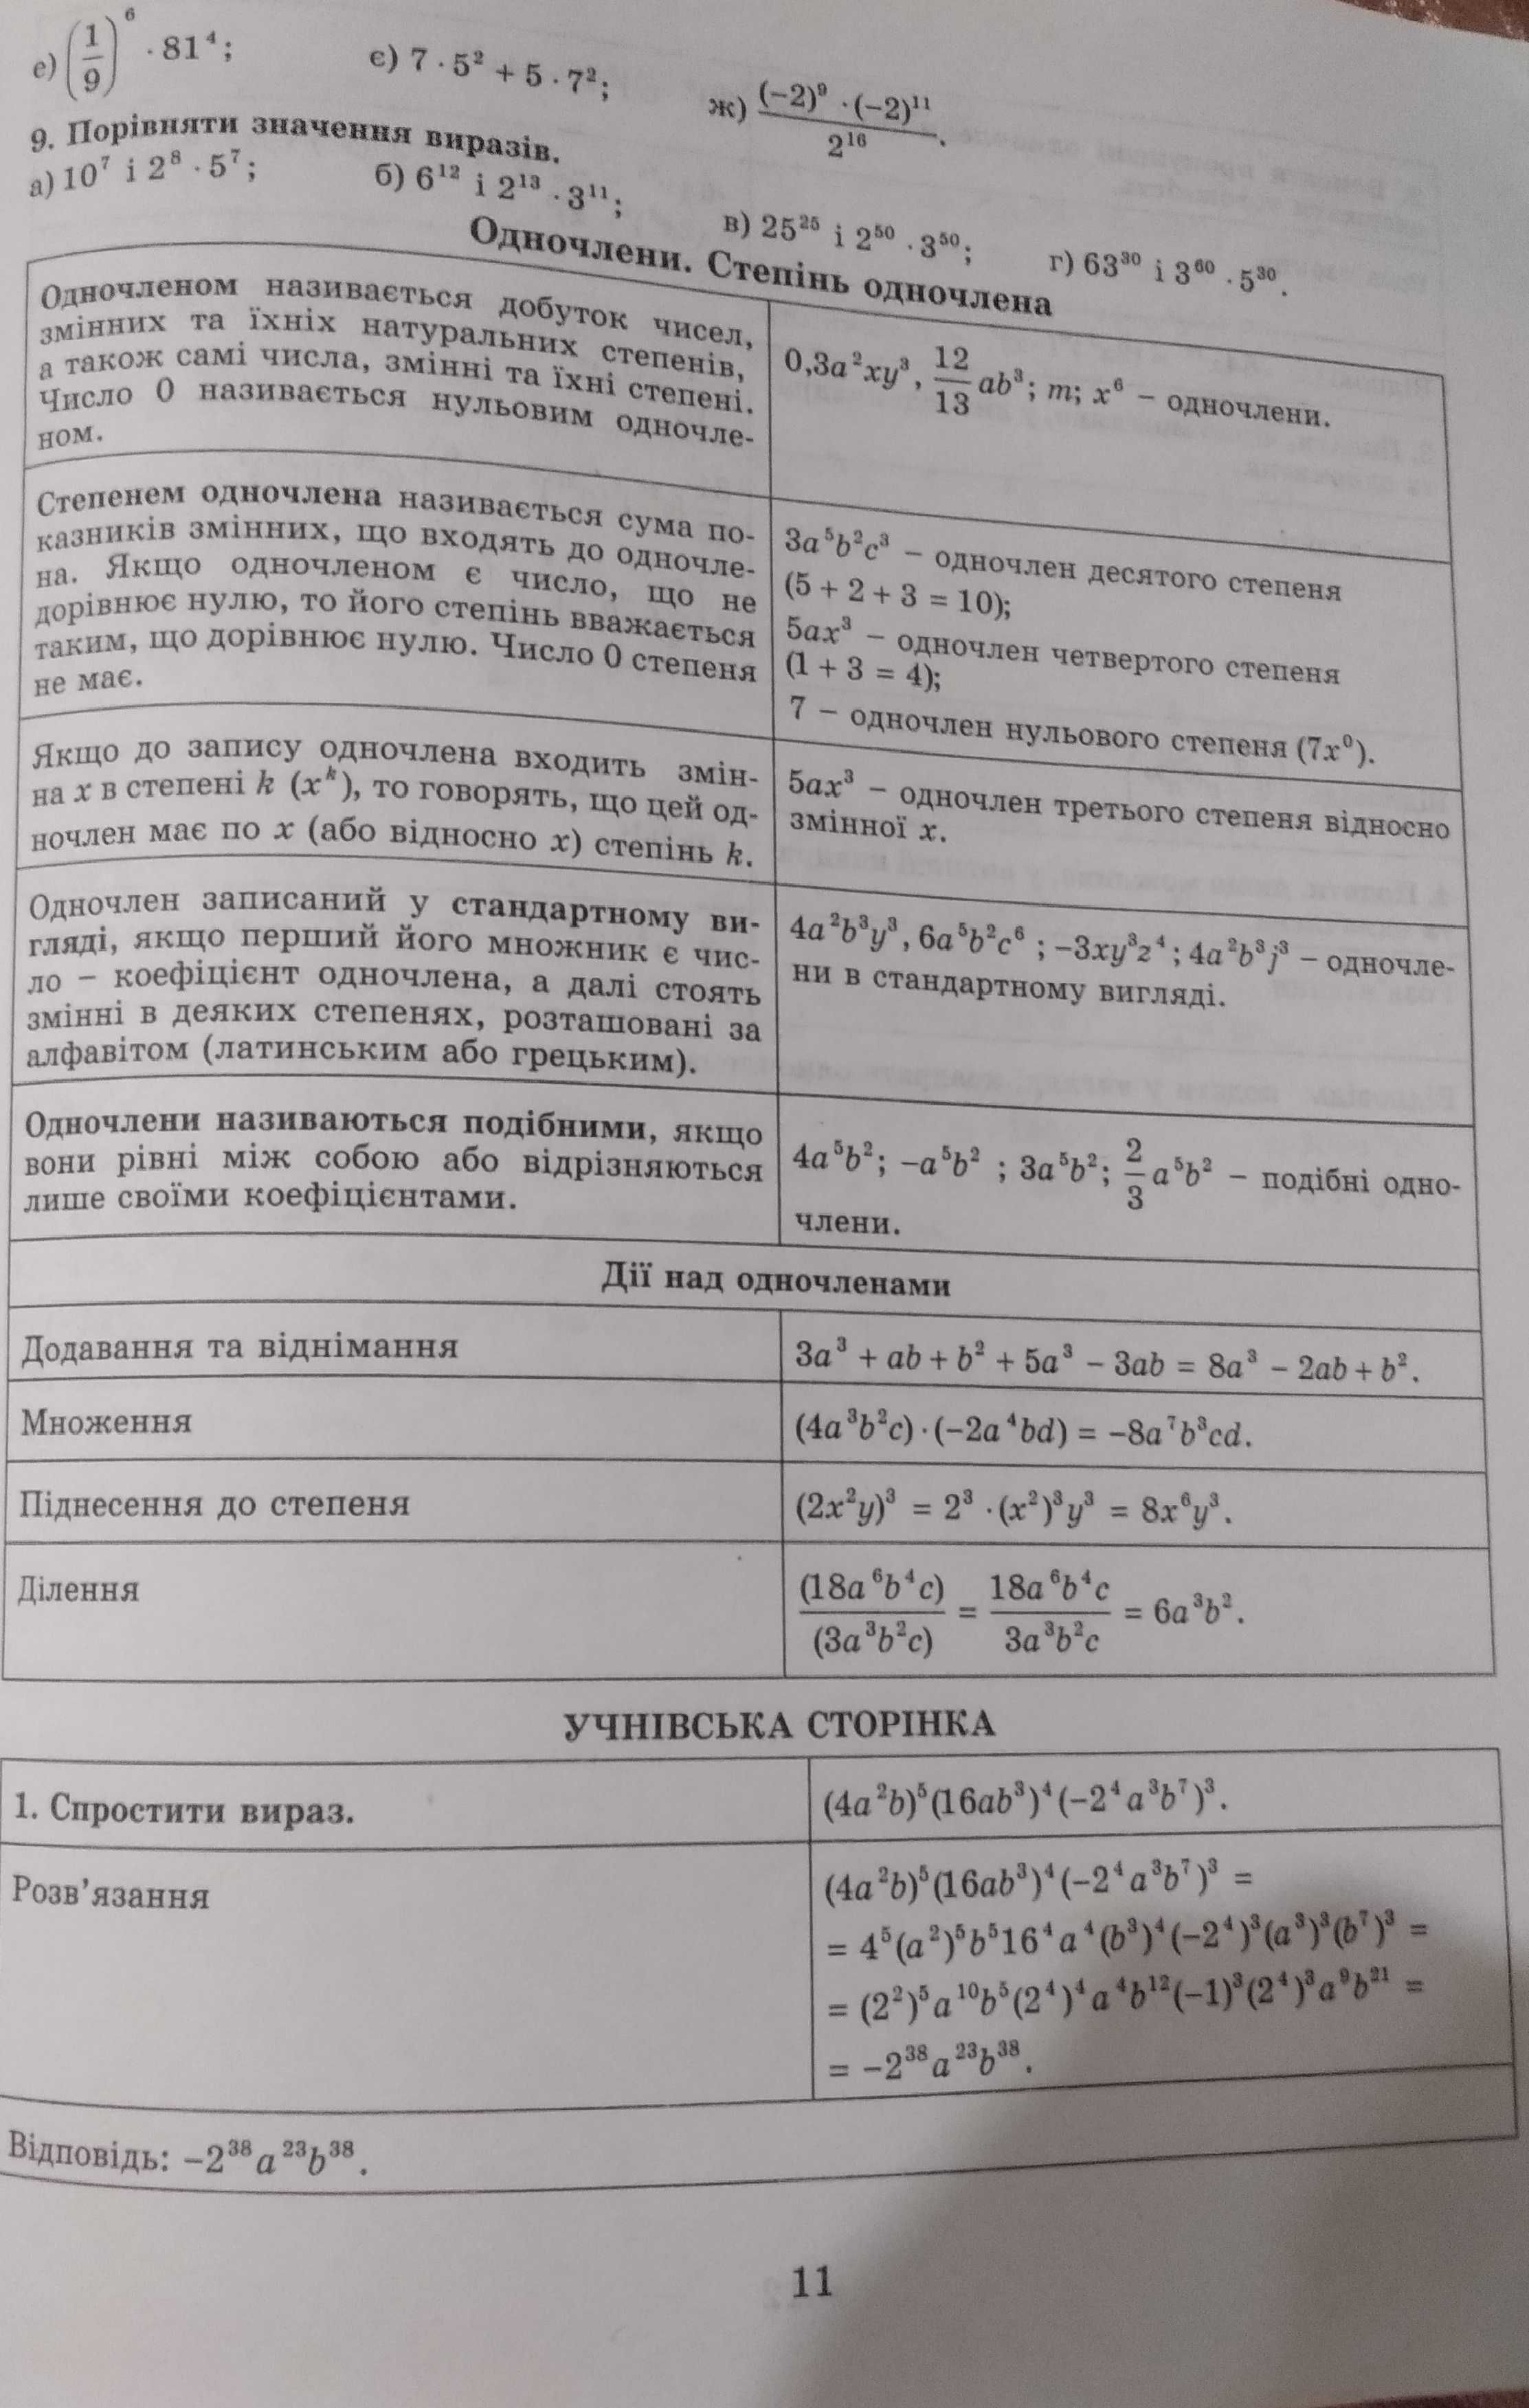 Т.Г. Роєва "Алгебра 7-9 класи"